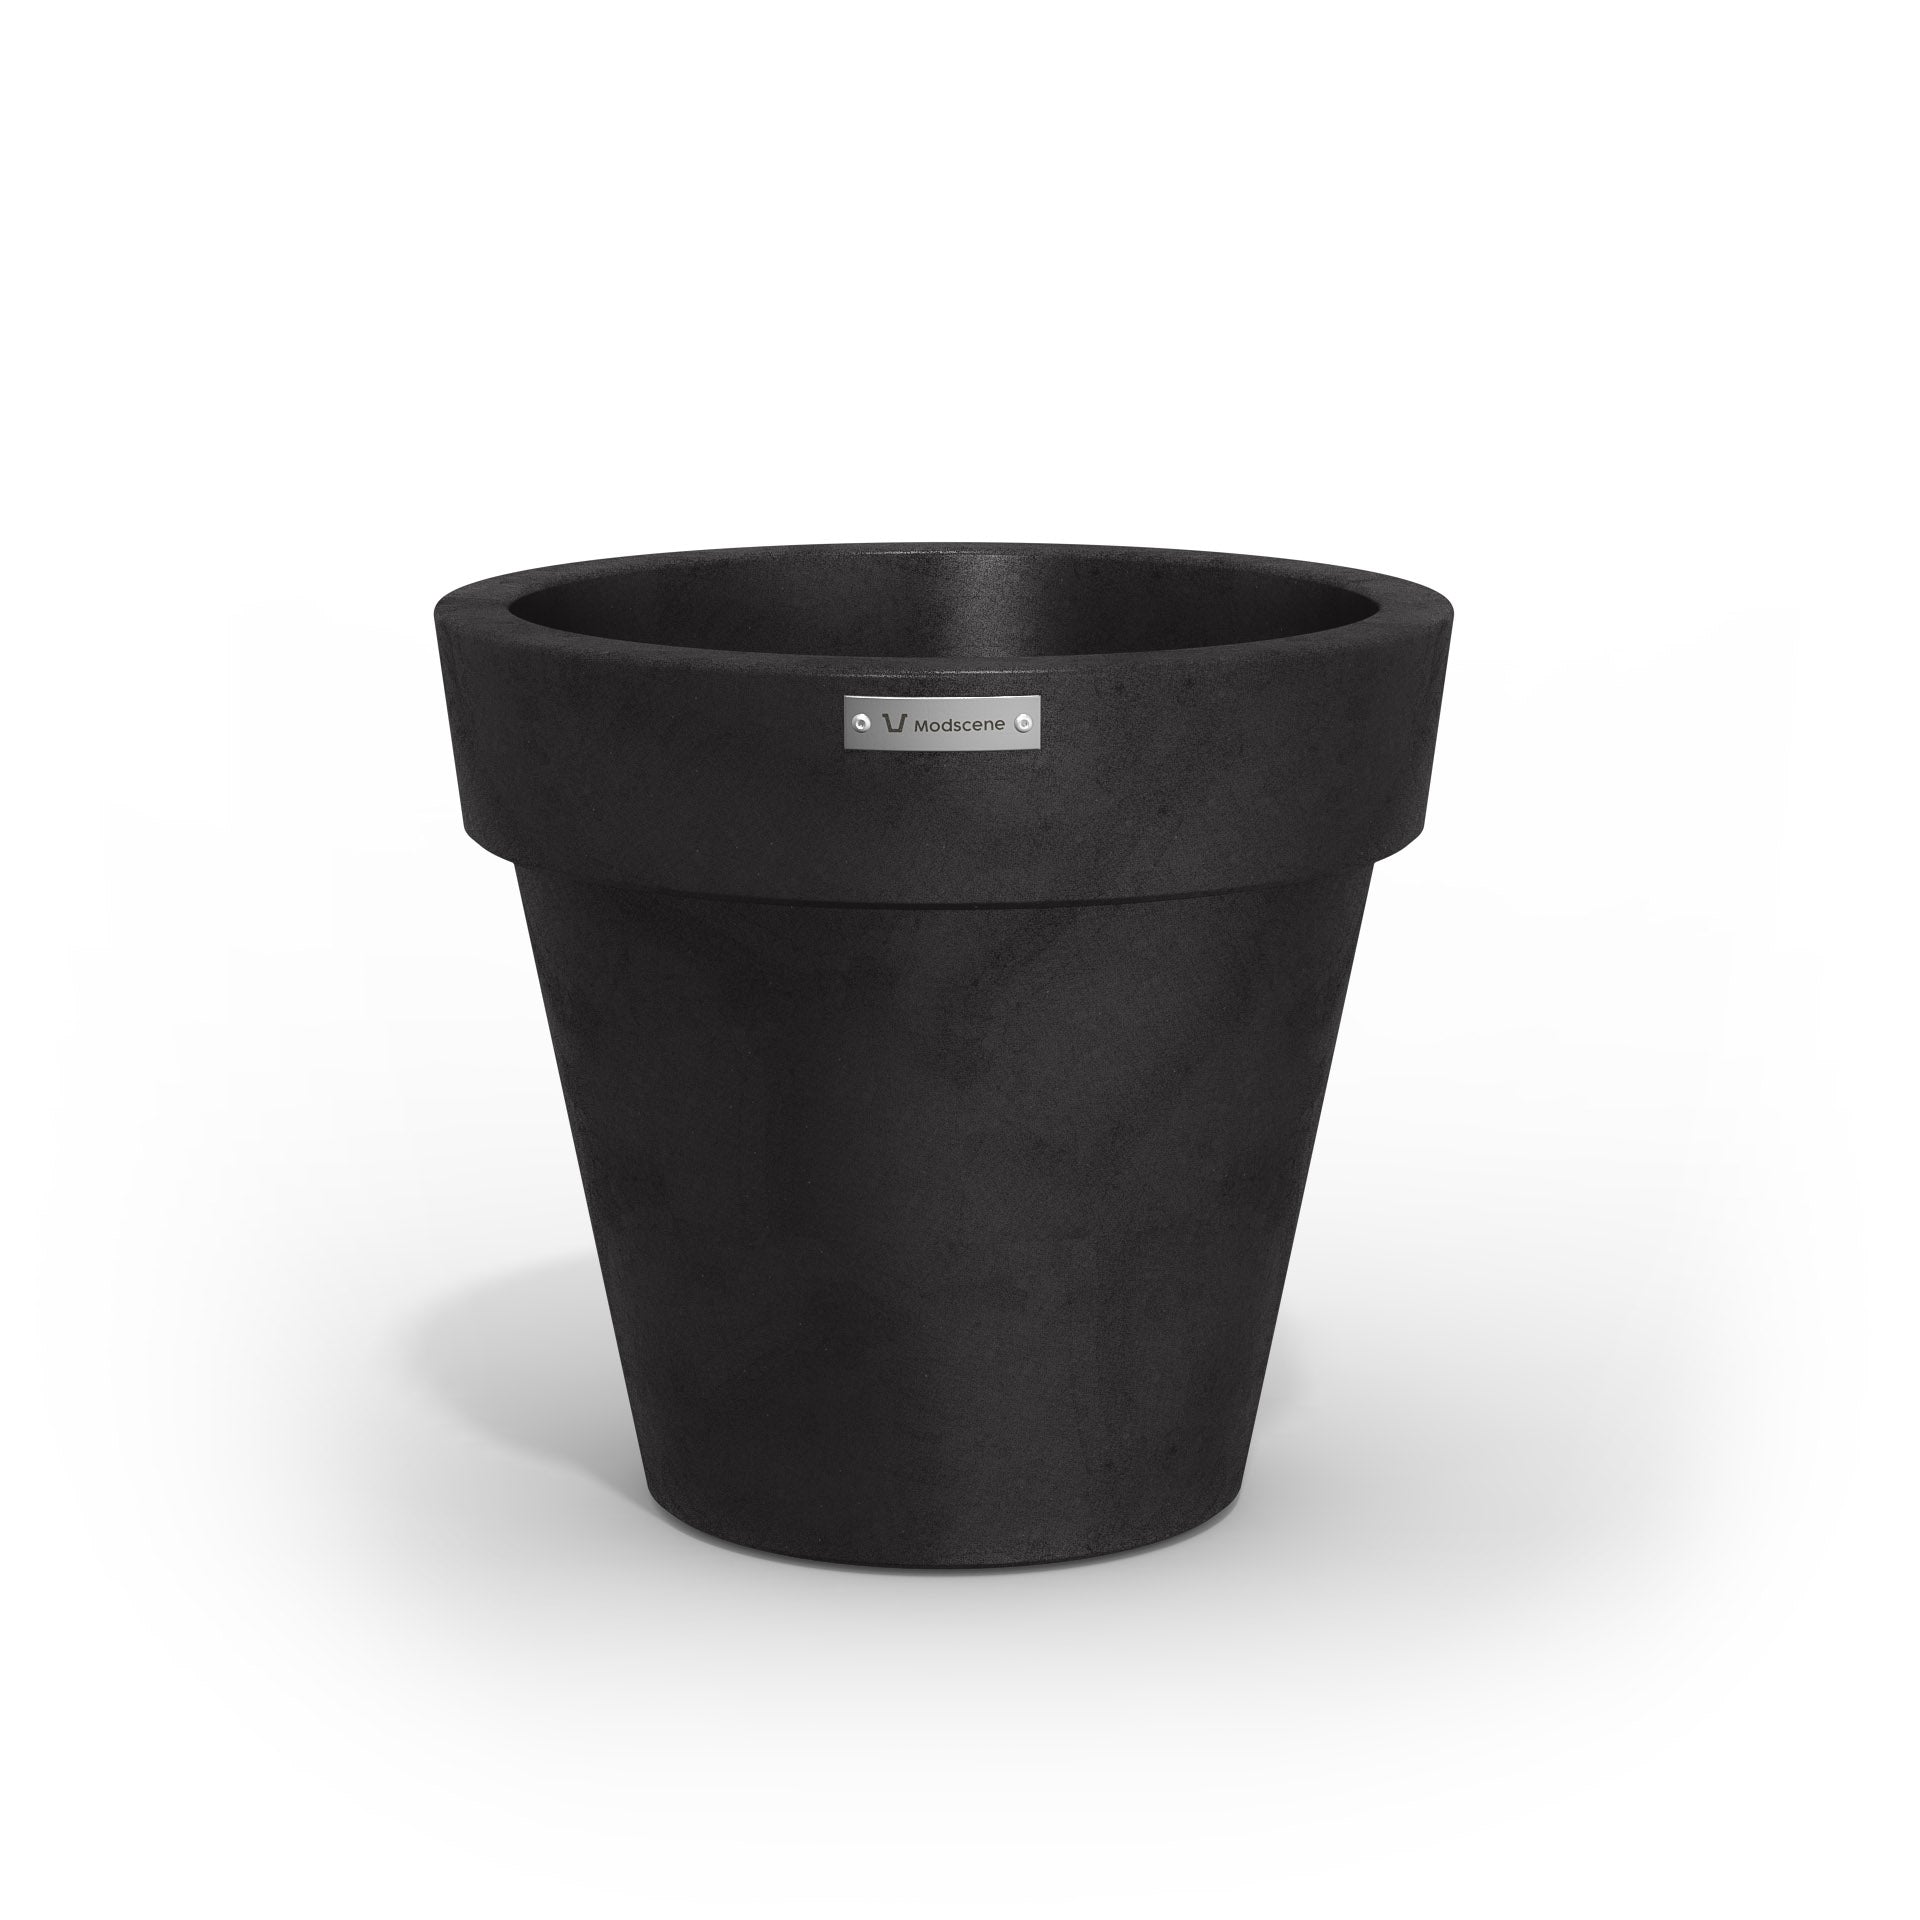 Black Modscene plastic planter pot with a concrete look finish.